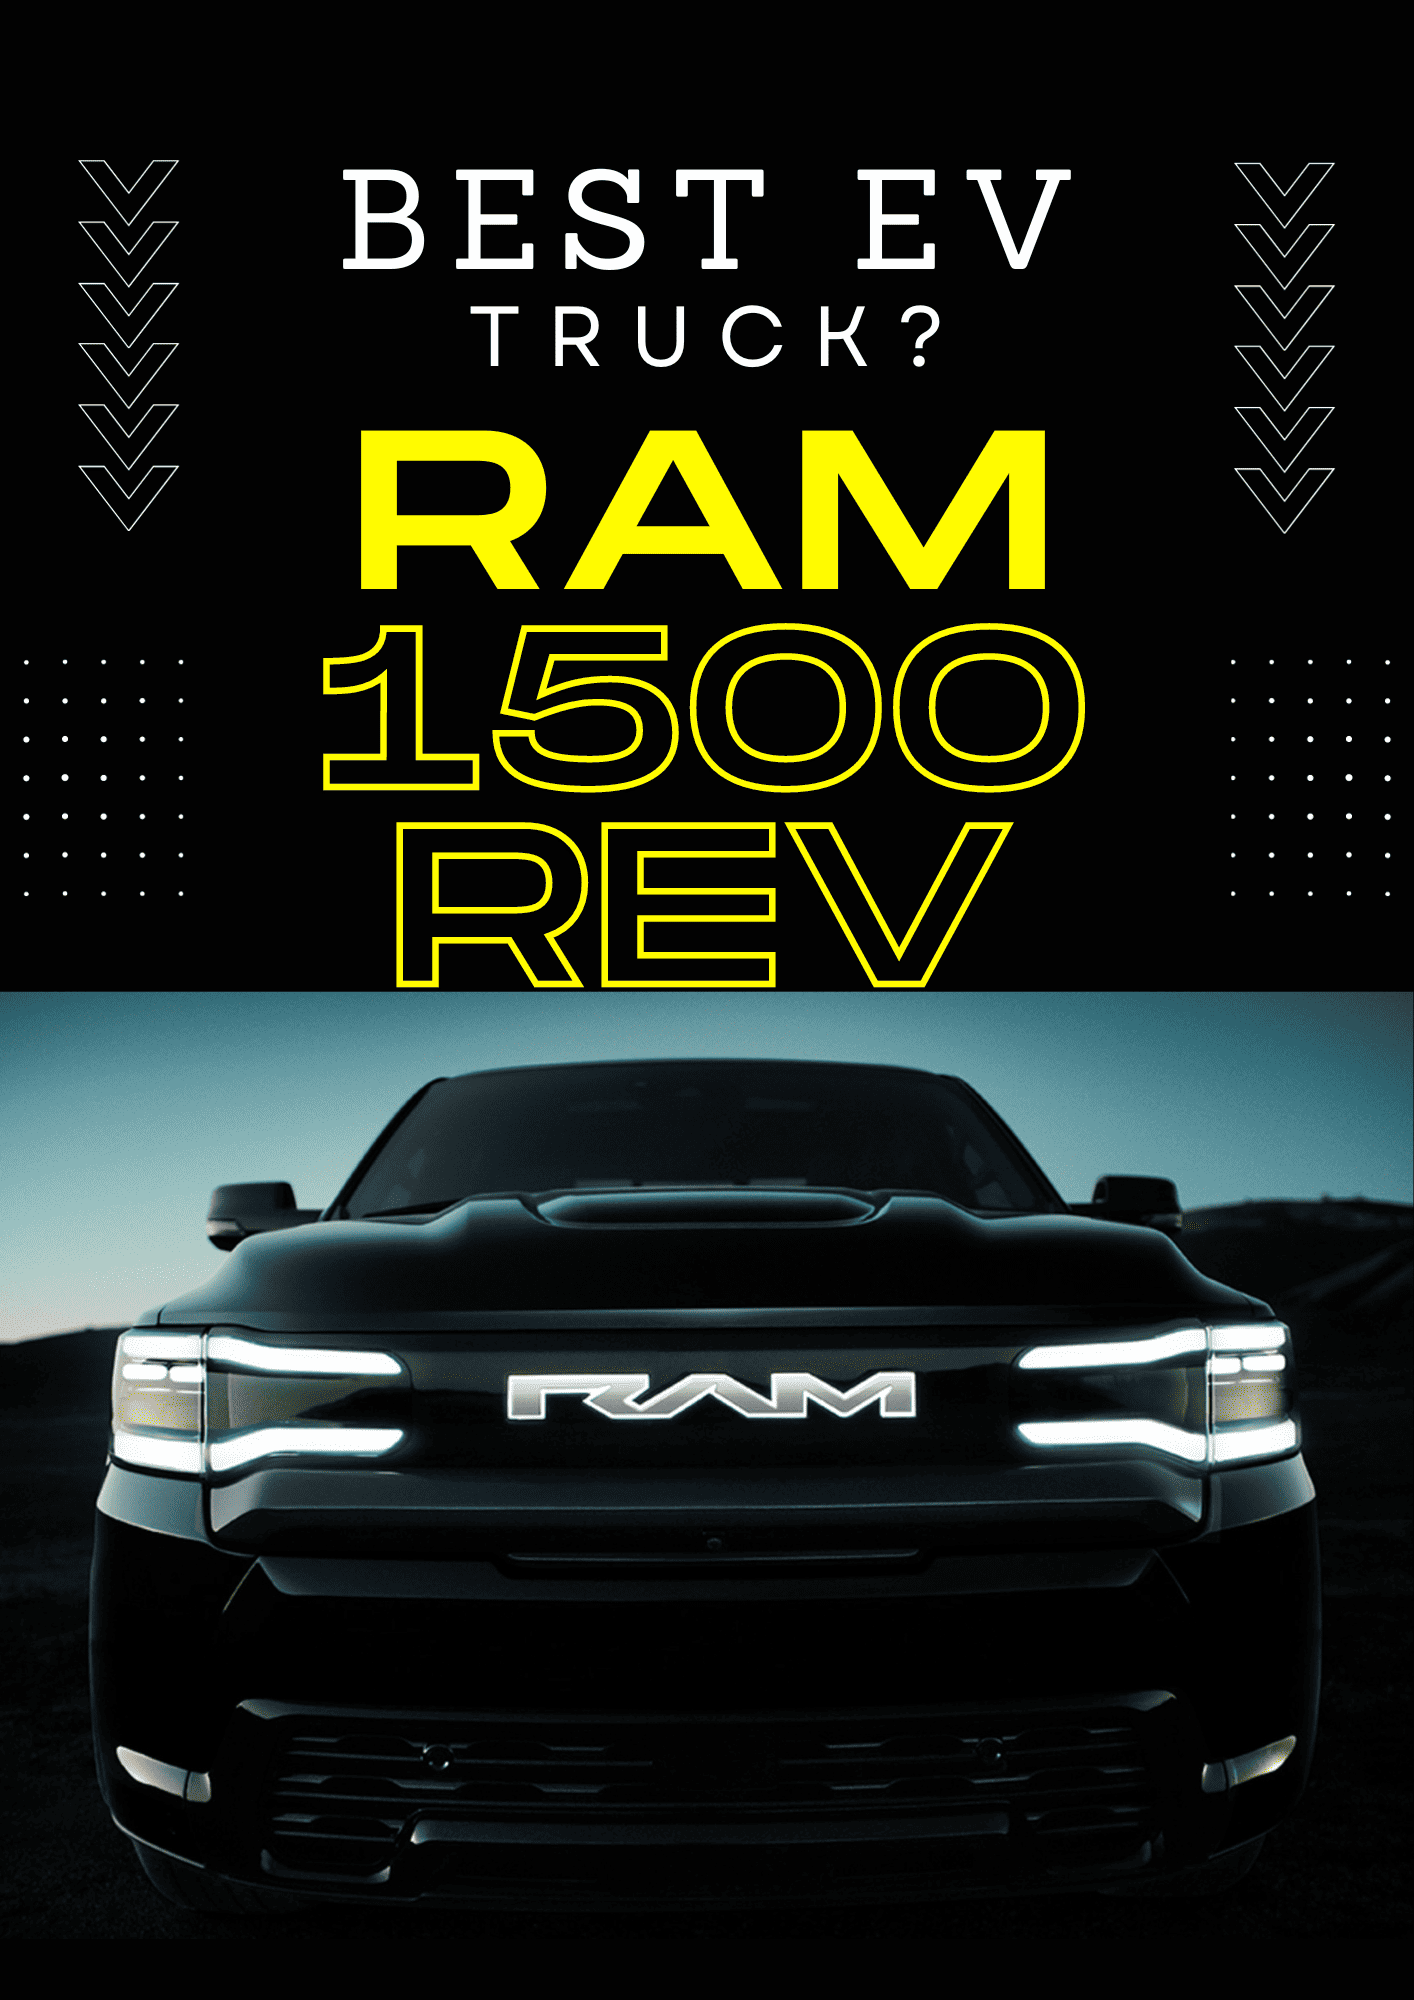 Why Ram 1500 REV is a Good EV Truck?